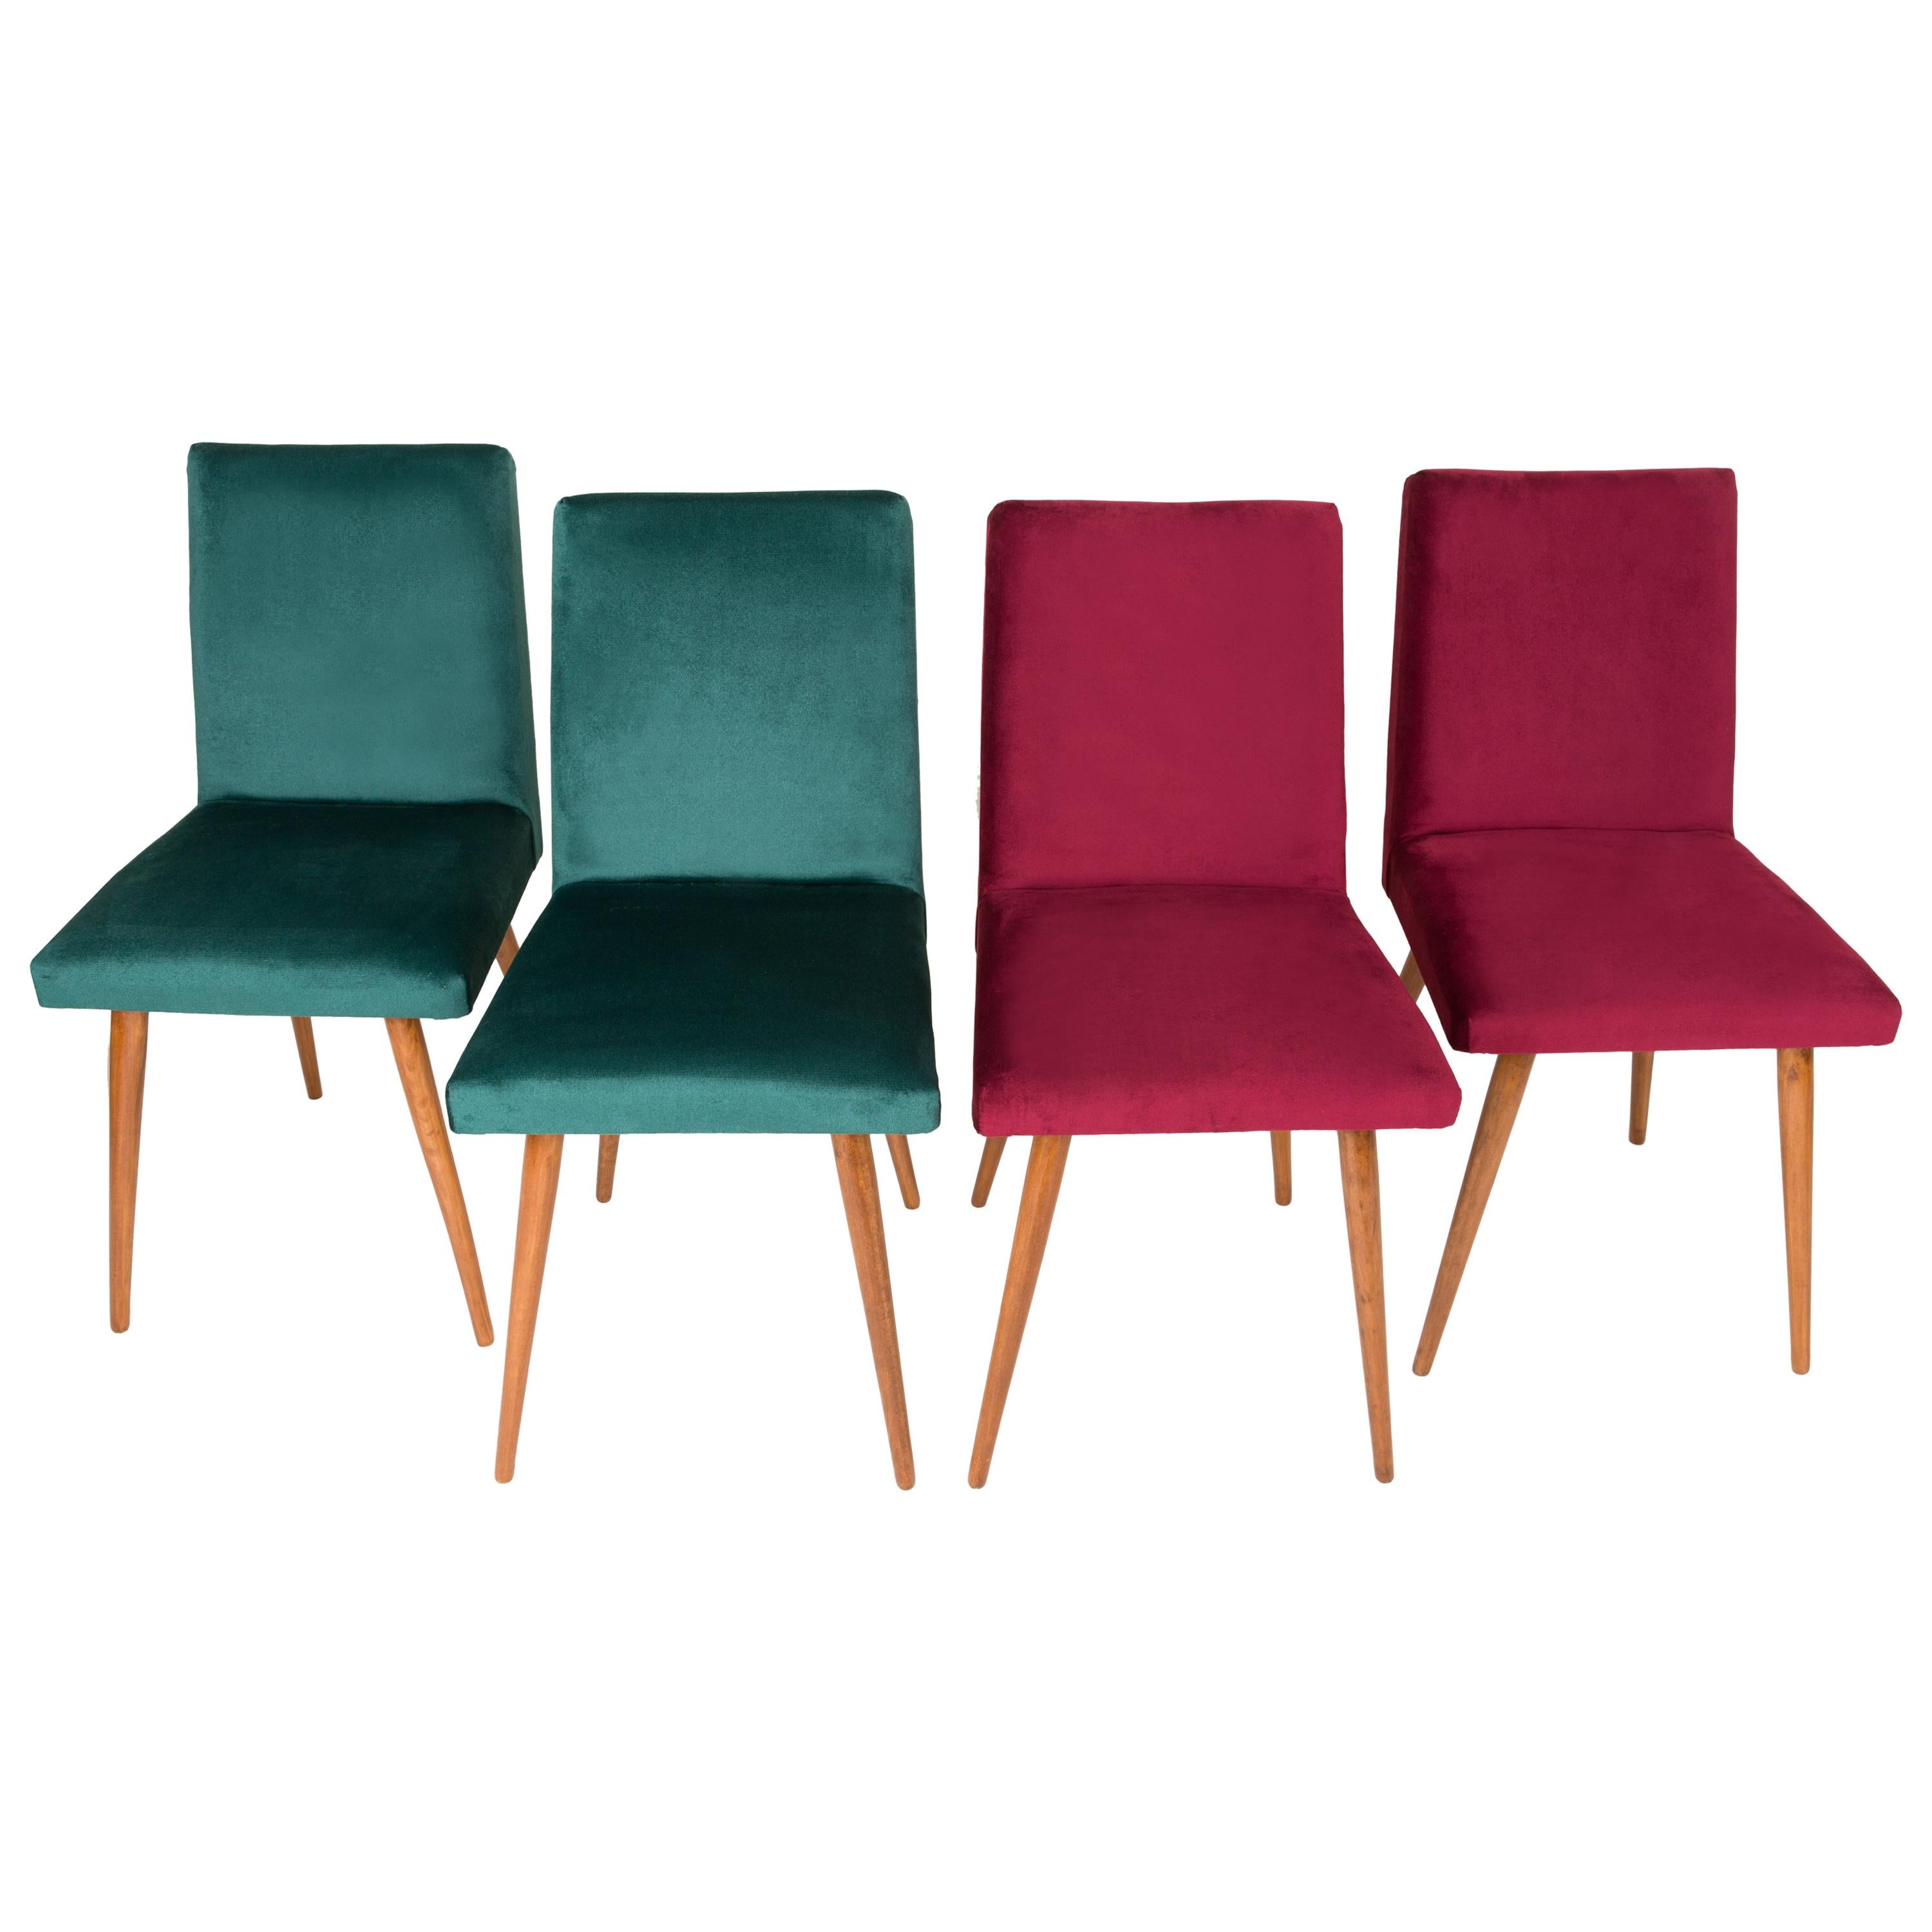 Set of Four 20th Century Dark Green and Burgundy Velvet Chairs, 1960s